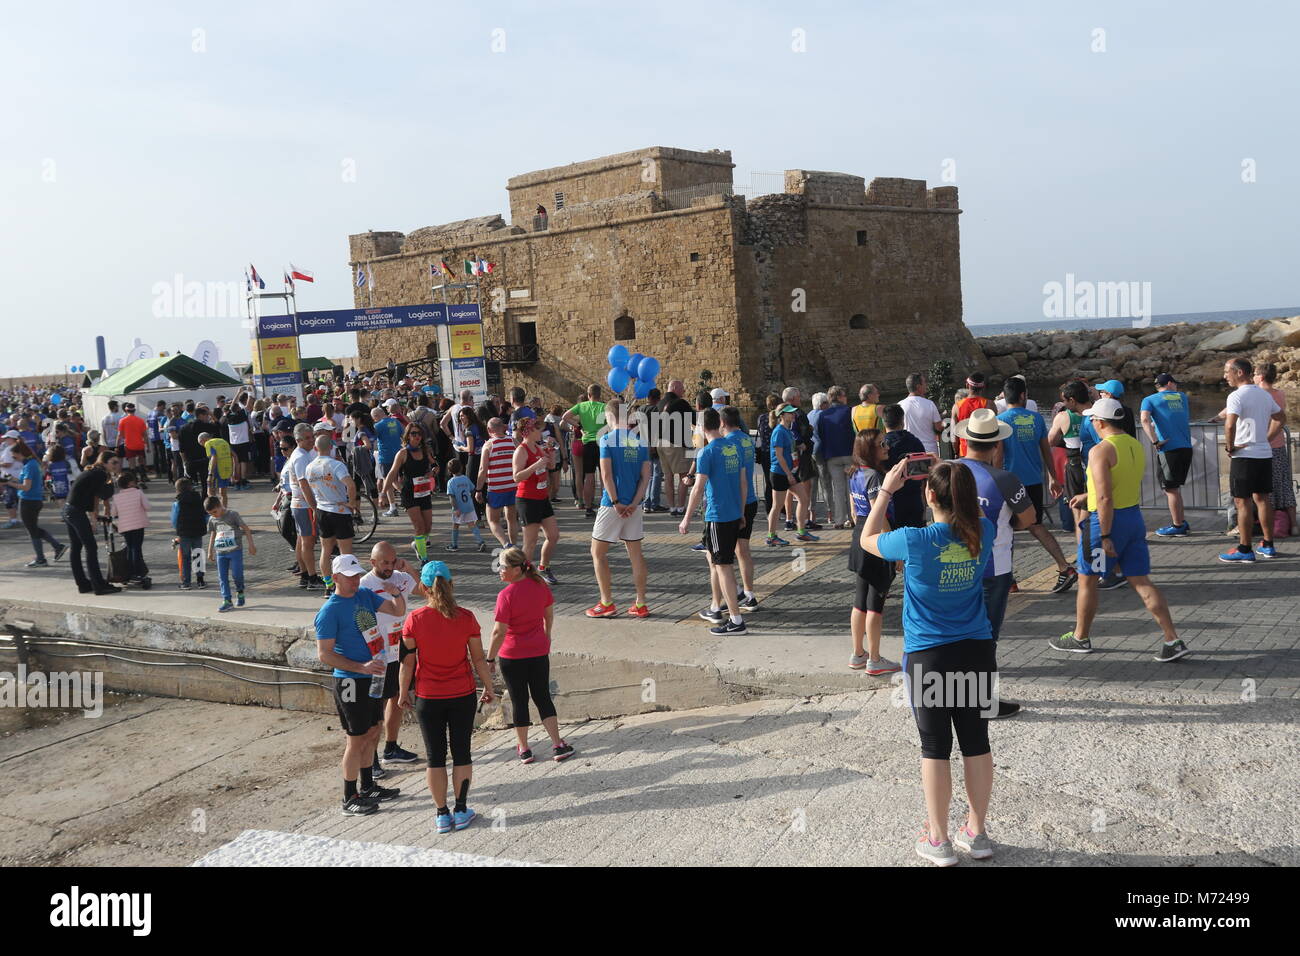 Competitor at the 20th Logicom Cyprus marathon, half marathon, 10KM, 5KM fun run taking pictures, Paphos harbour near Paphos fort, Cyprus, Europe Stock Photo